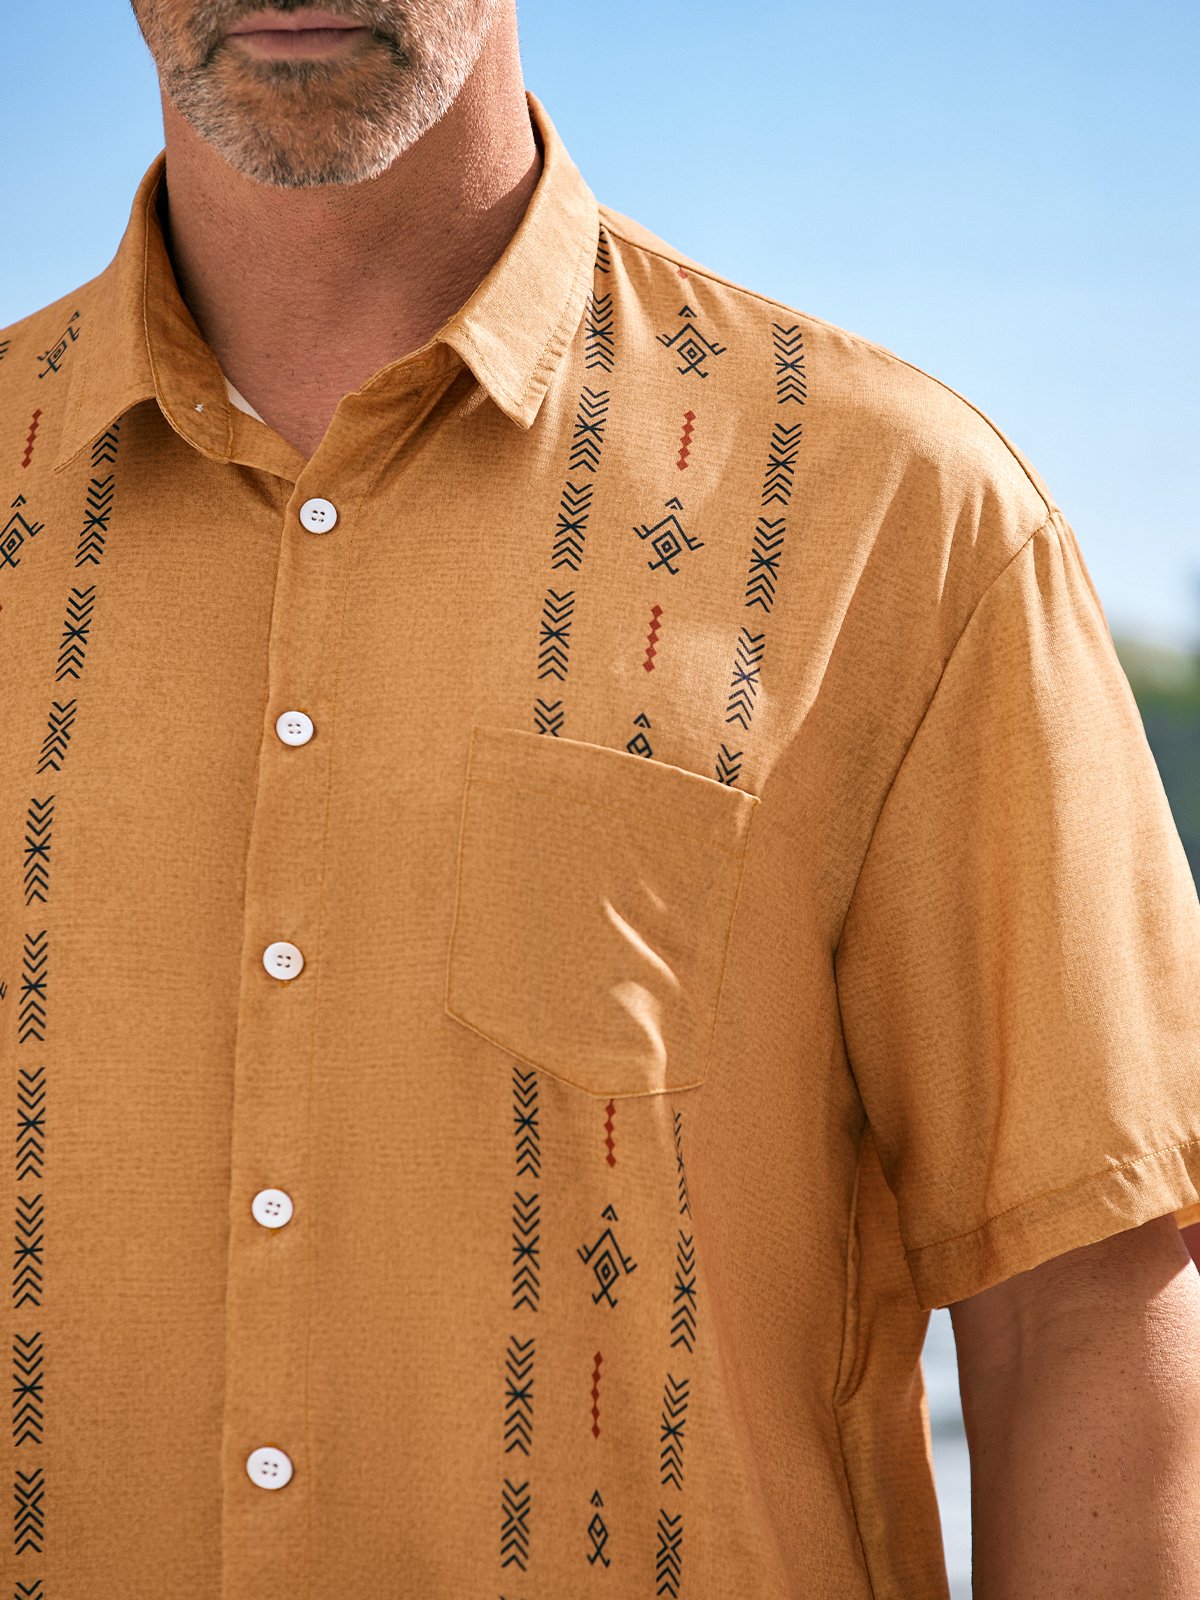 Stripe Chest Pocket Short Sleeve Casual Bowling Shirt